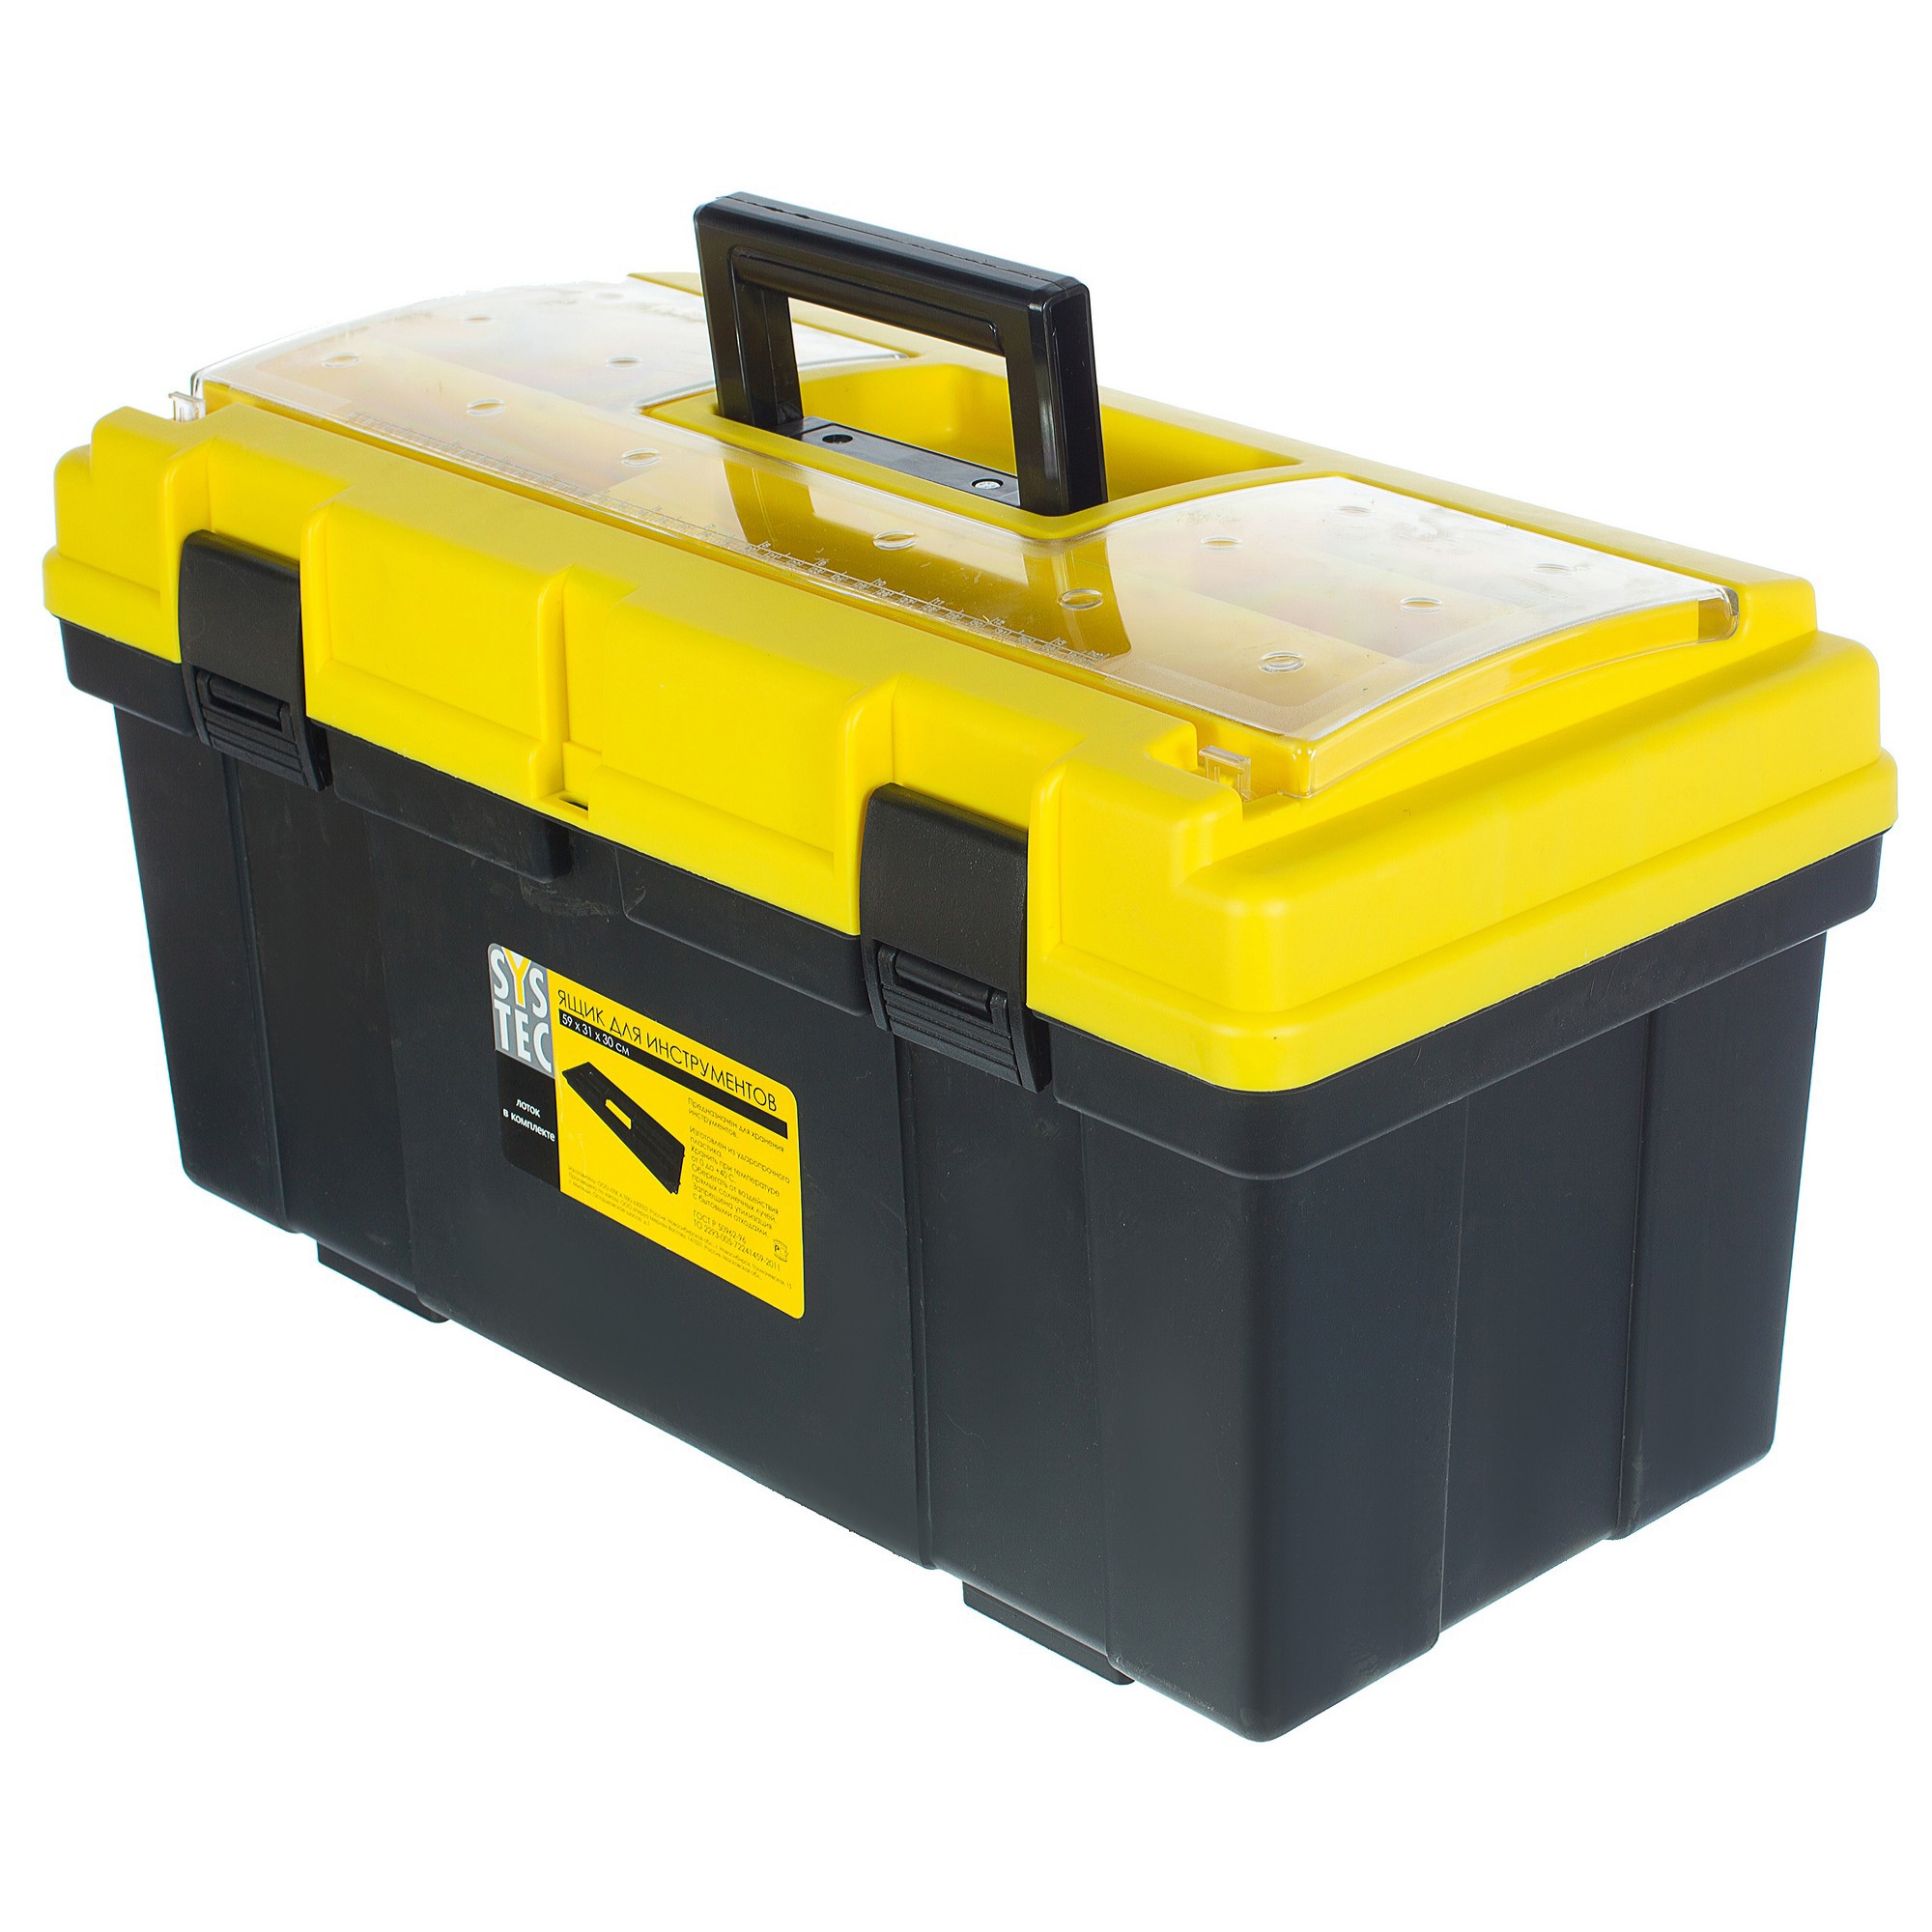 12829203 Ящик для инструмента 300х310х590 мм, пластик, цвет чёрно-жёлтый STLM-0002439 SYSTEC